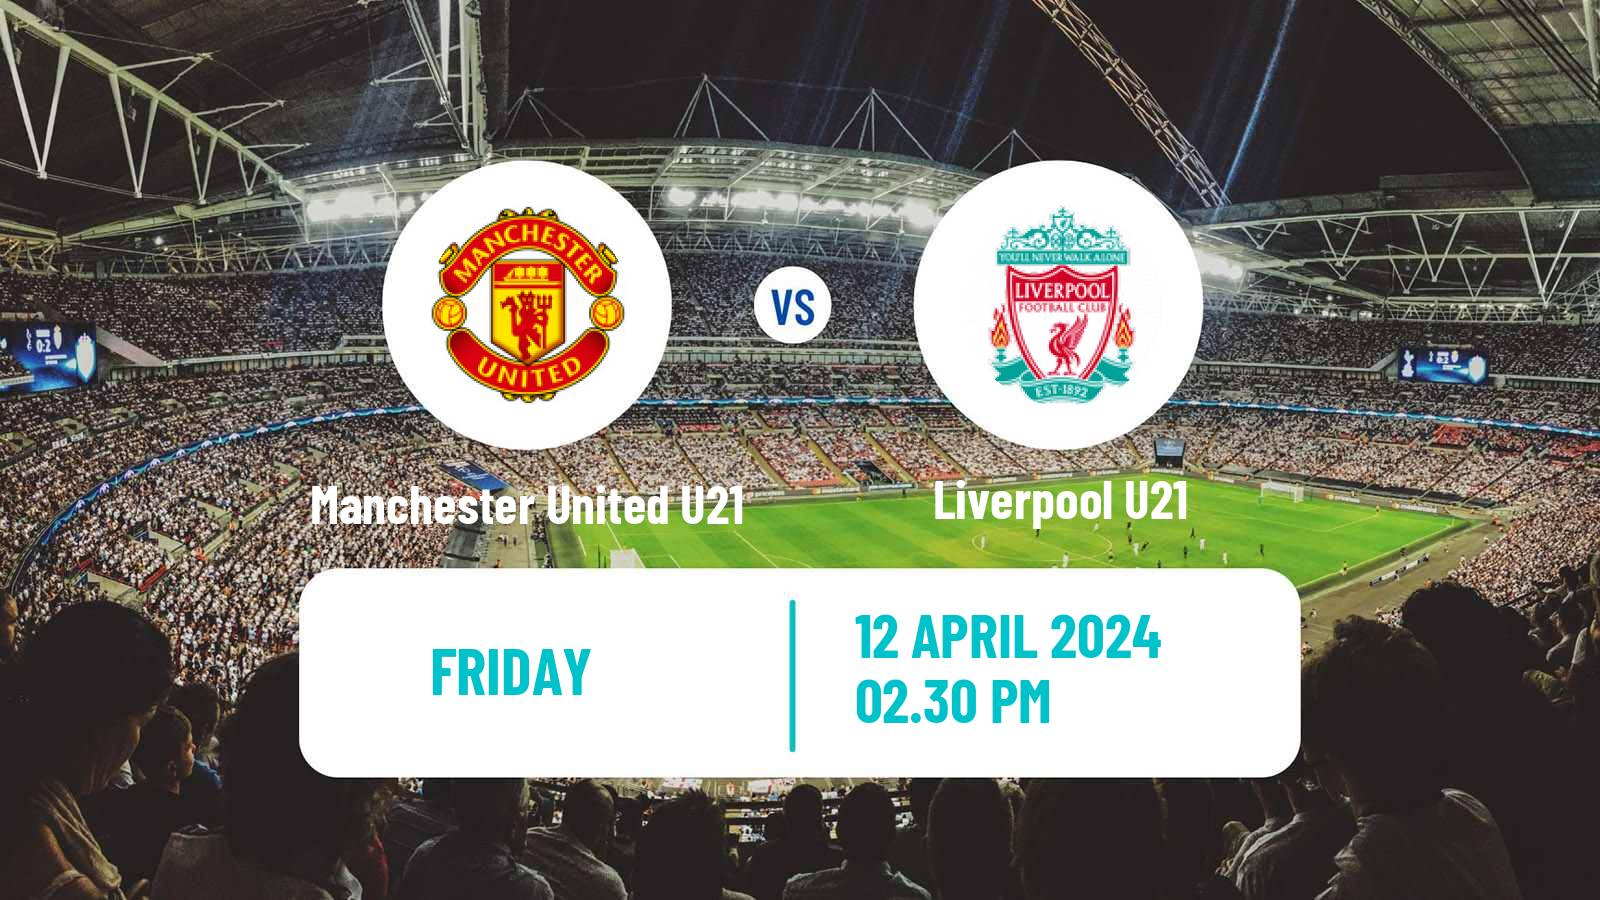 Soccer English Premier League 2 Manchester United U21 - Liverpool U21